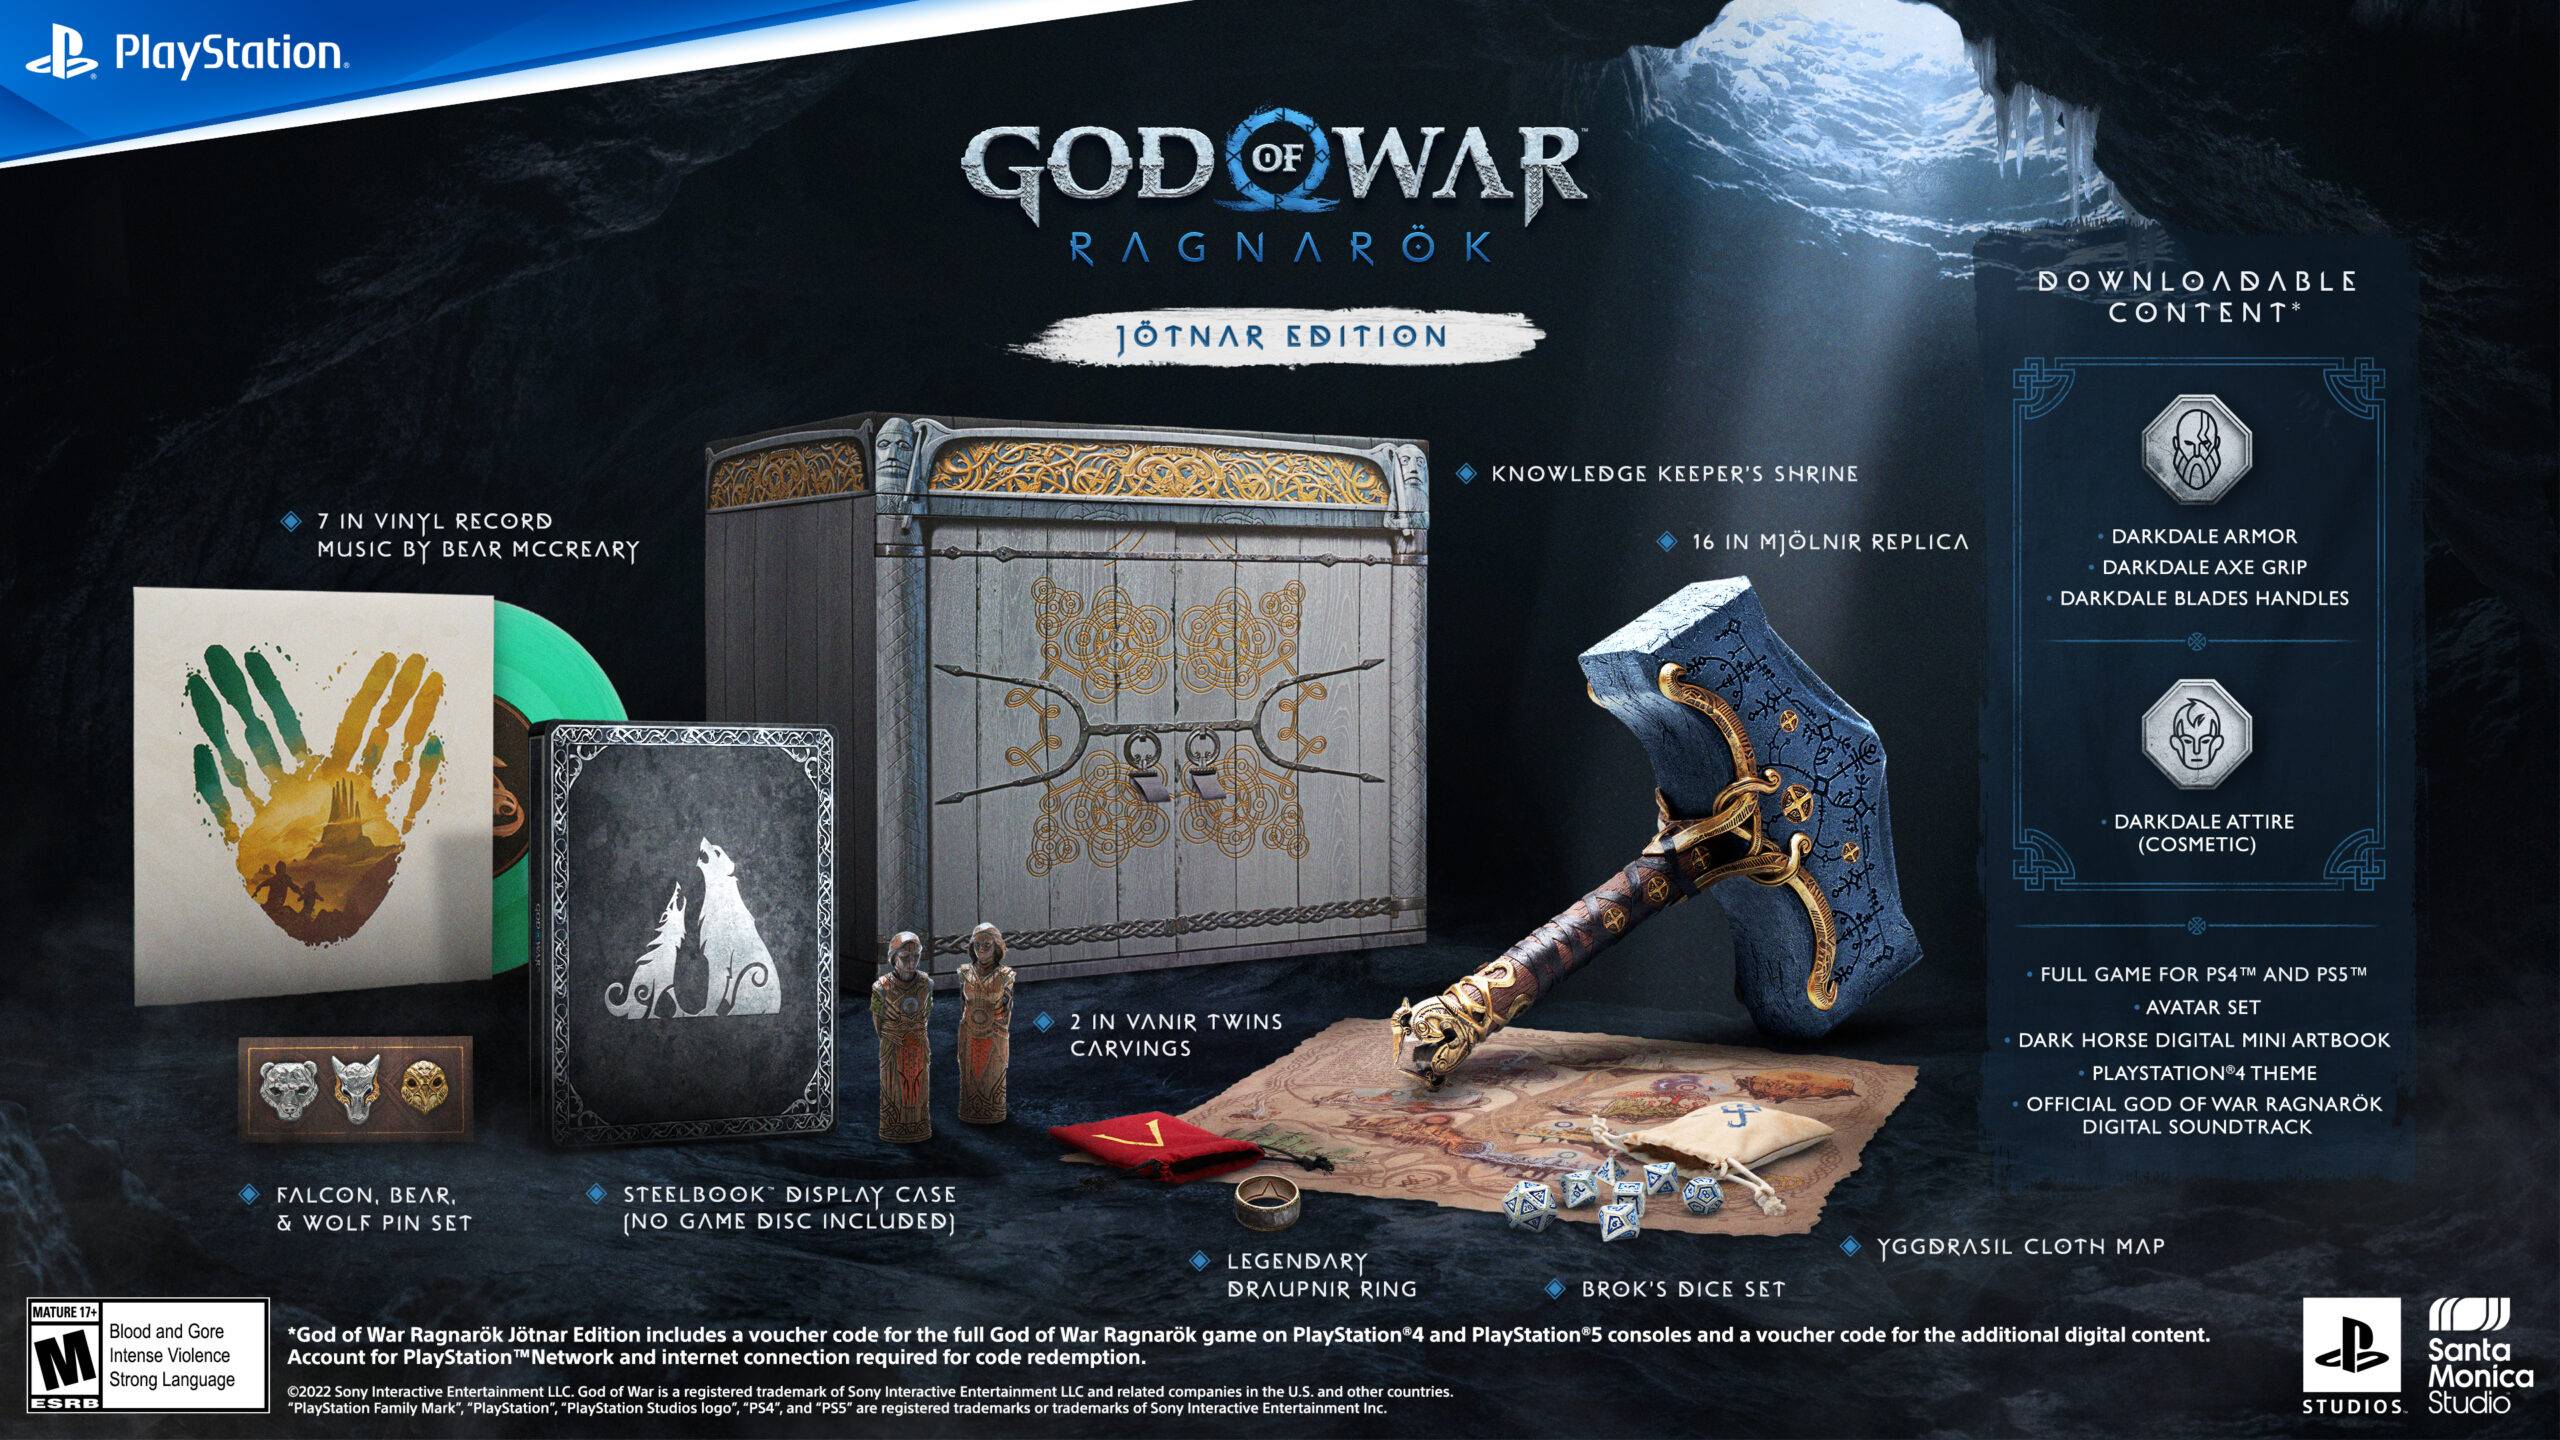 Gandalf Gaming on X: God of war: Ragnarok looks like a clone of